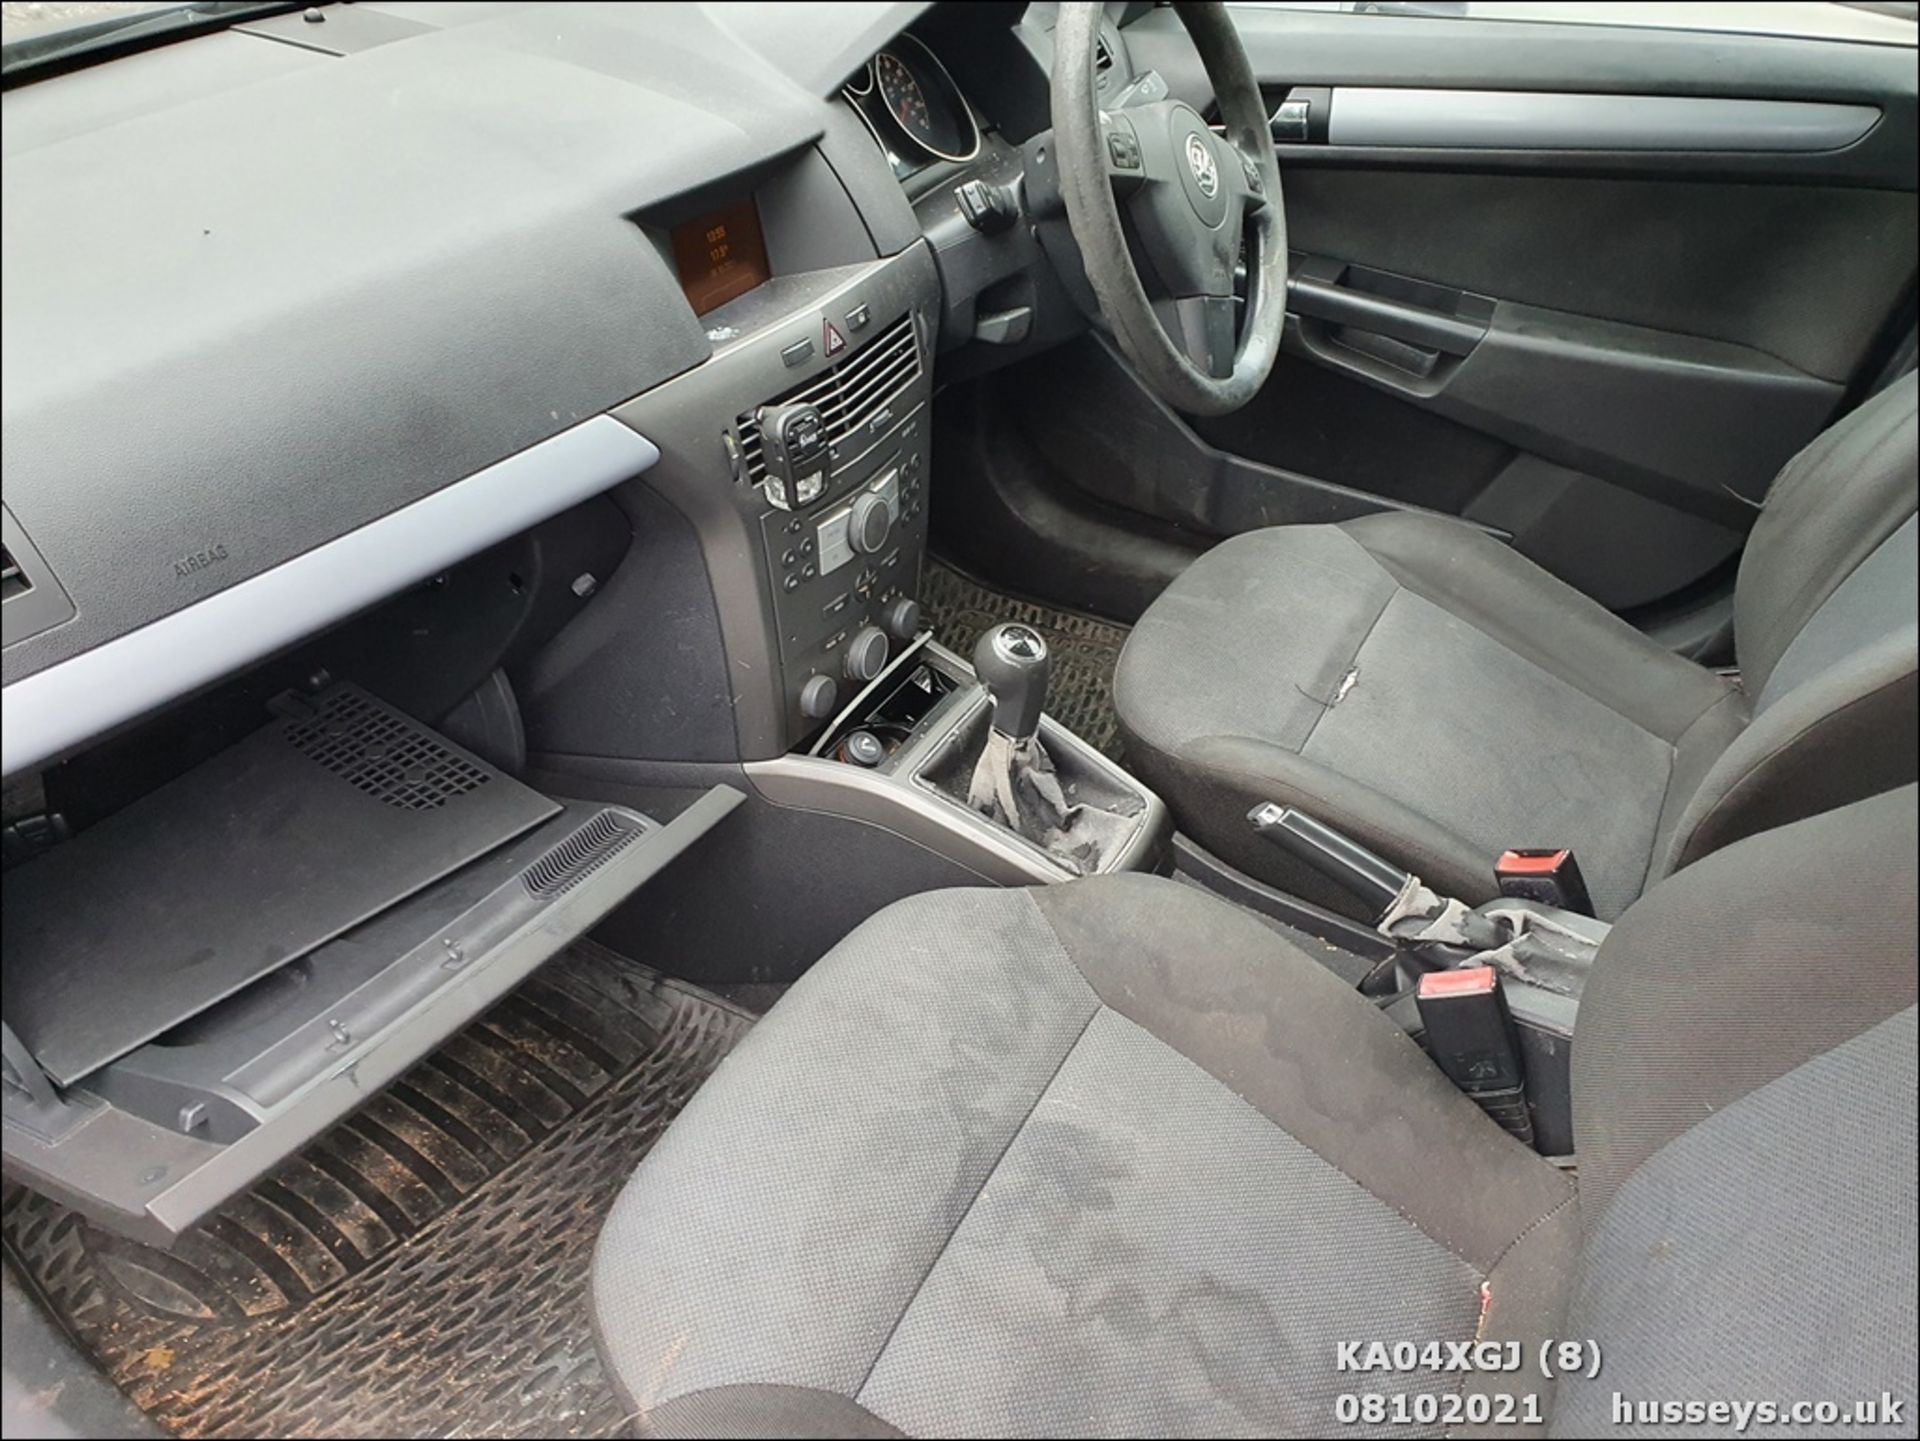 04/04 VAUXHALL ASTRA CLUB CDTI - 1686cc 5dr Hatchback (Blue, 150k) - Image 8 of 13